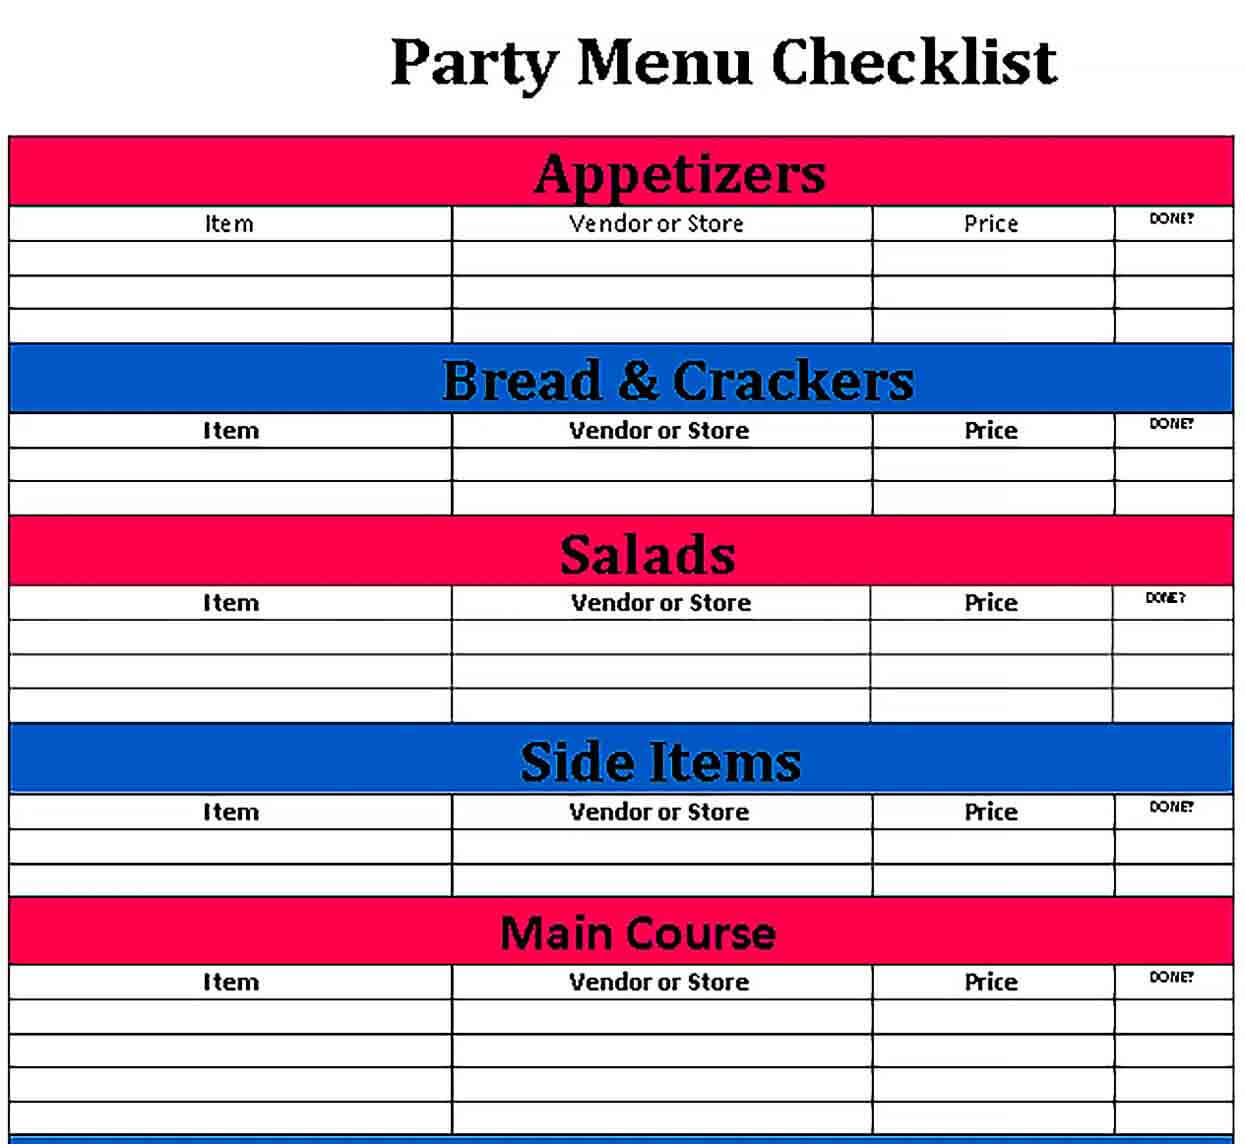 Sample Party Menu Checklist Template